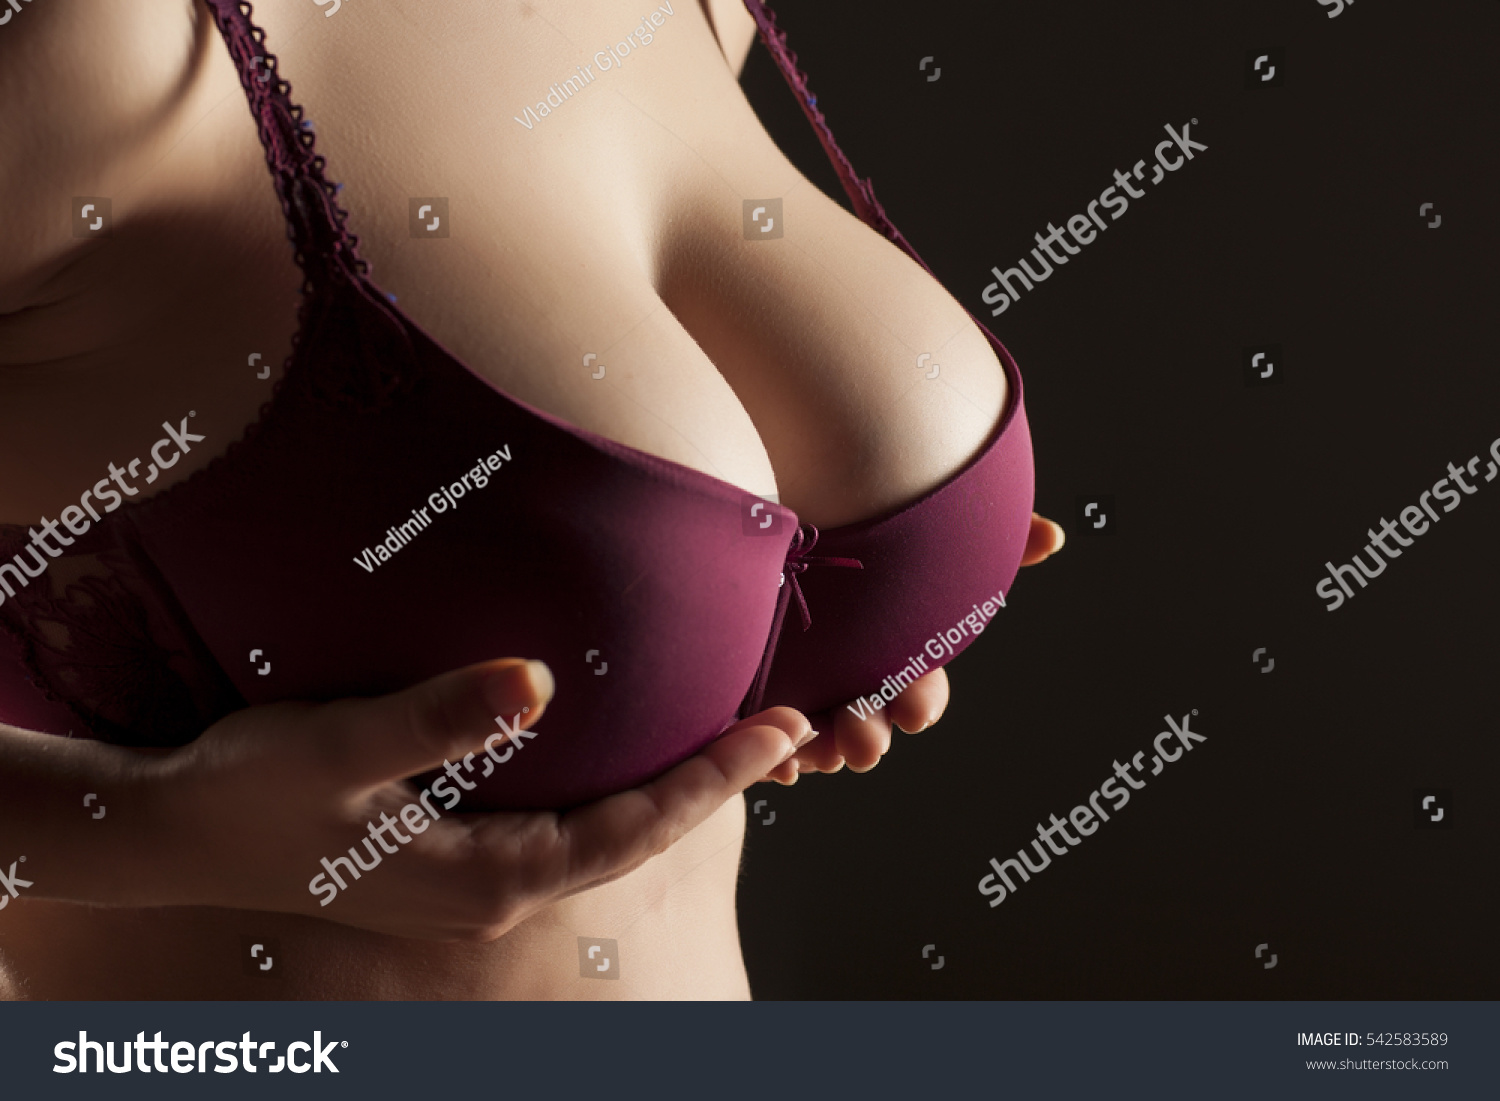 Beautiful breasts photos